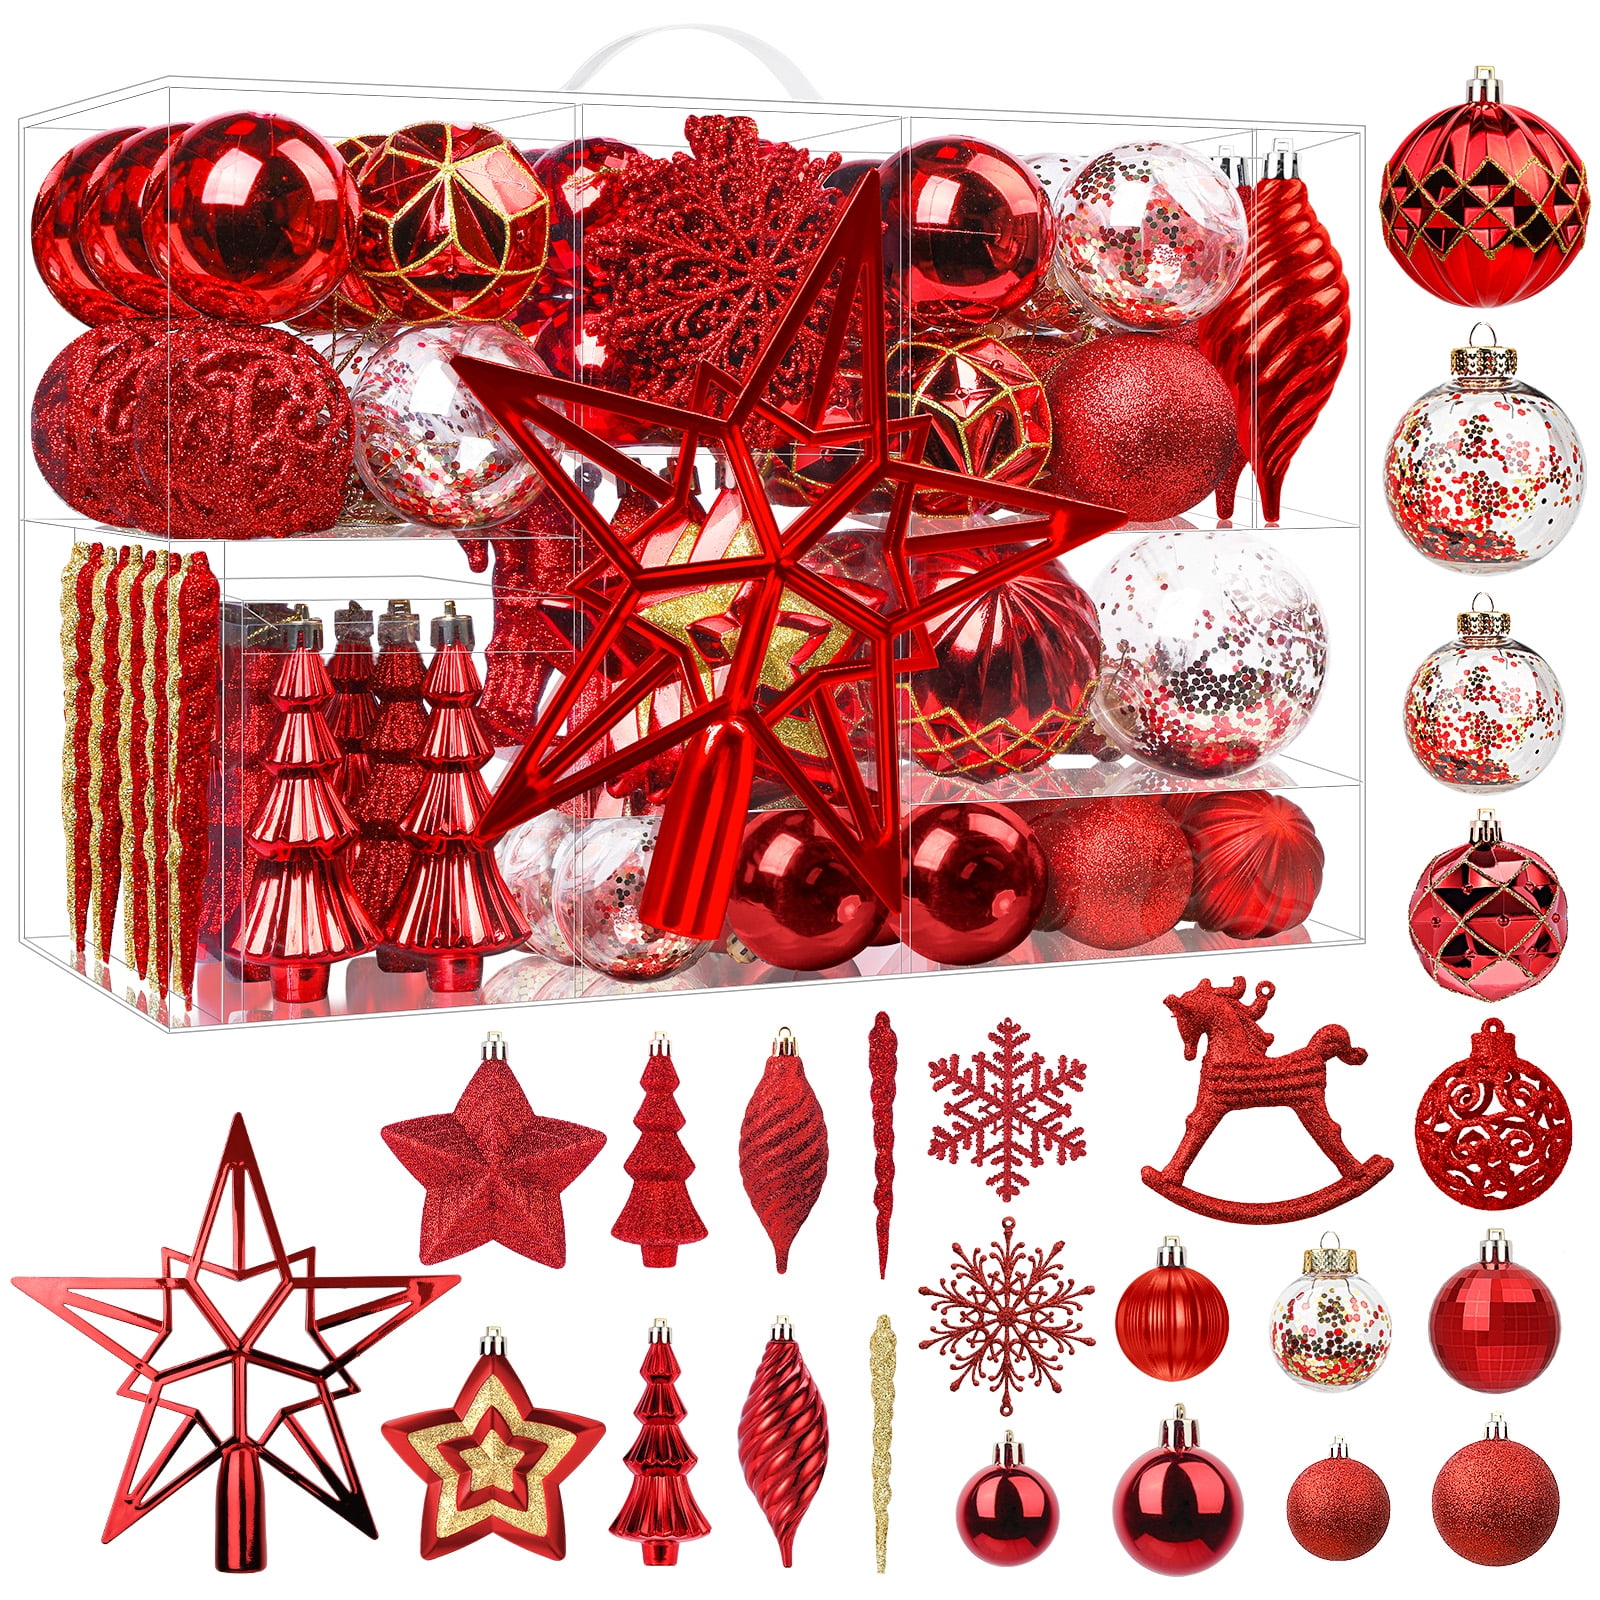 SHareconn 100pcs Christmas Balls Ornaments Set, Shatterproof Plastic ...